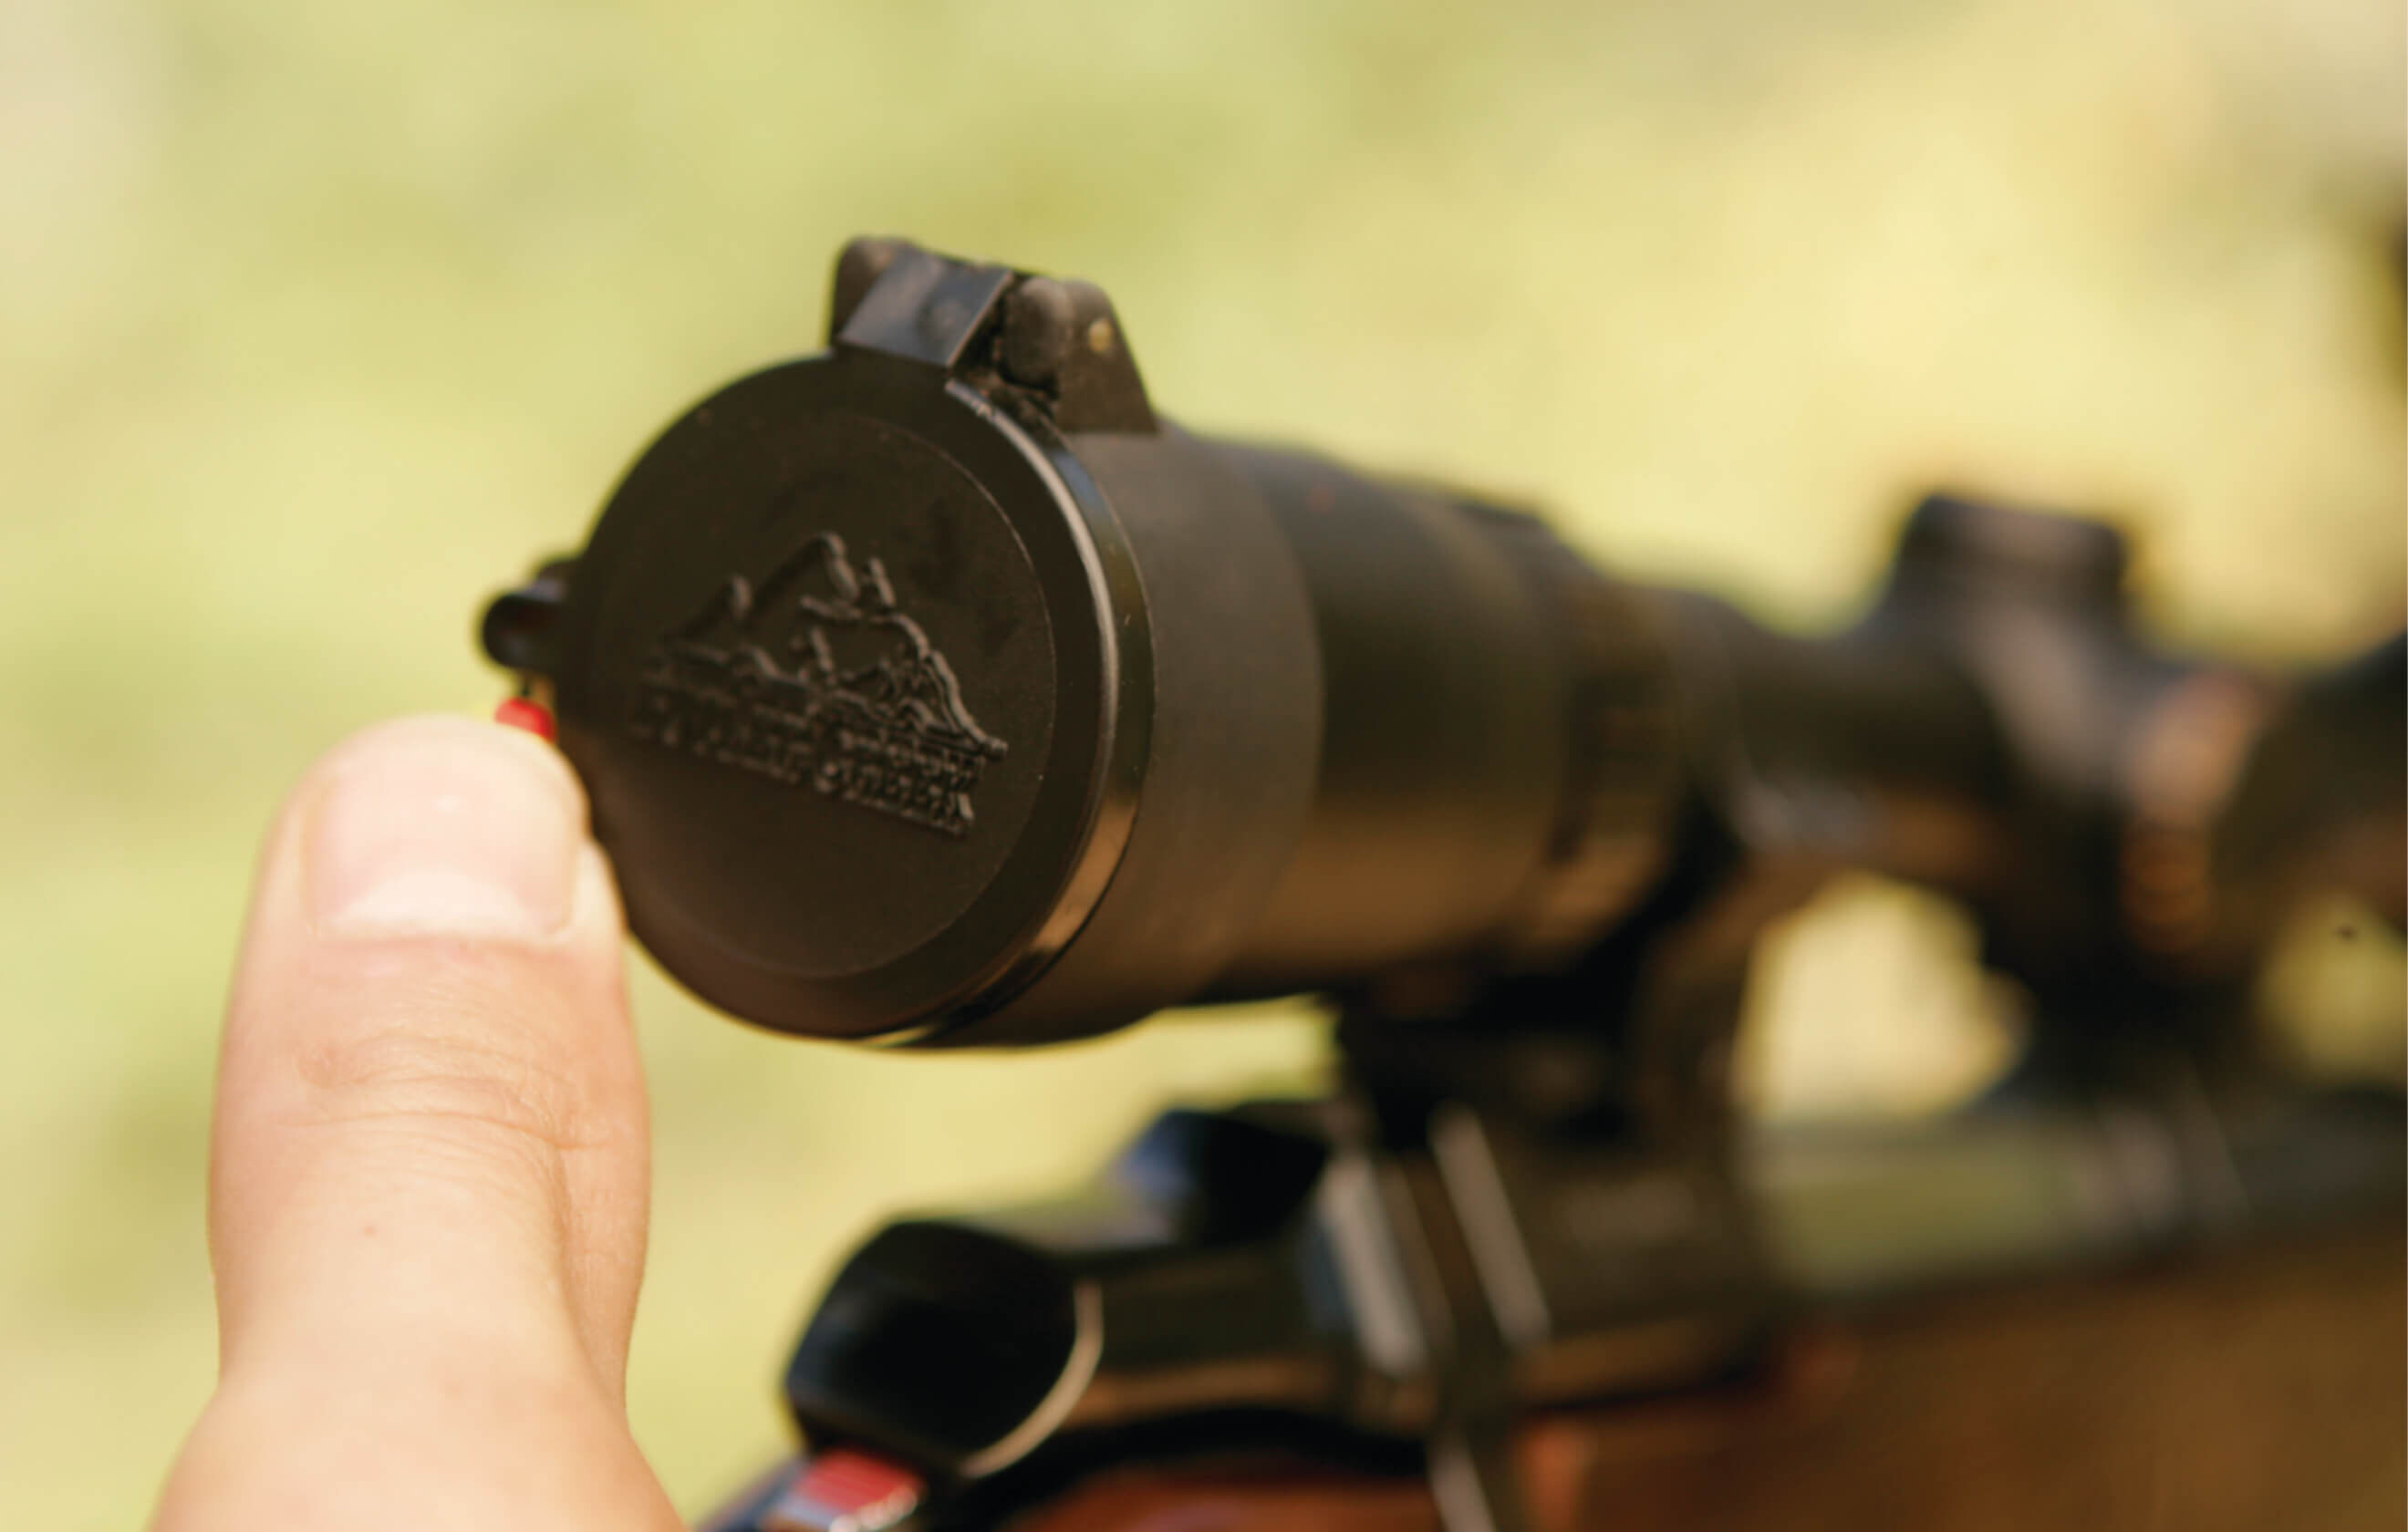 Butler Creek FLIP-OPEN Eyepiece Rifle/Shotgun Scope Eye Piece Cover Sizes 1-20 